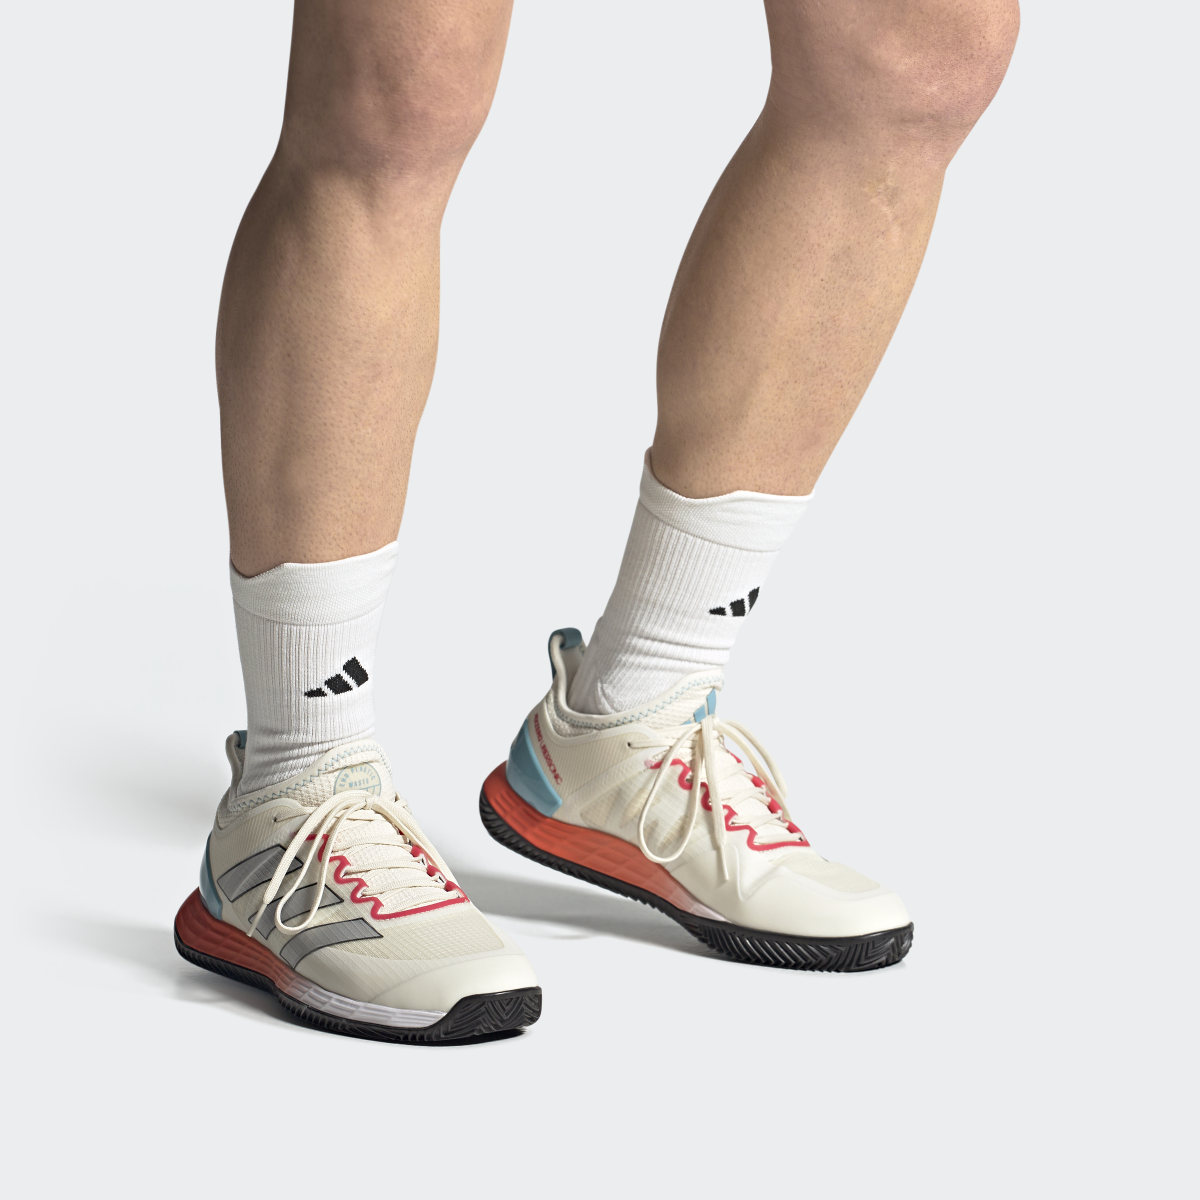 Adidas adizero Ubersonic 4 Clay Court Tennis Shoes. 5